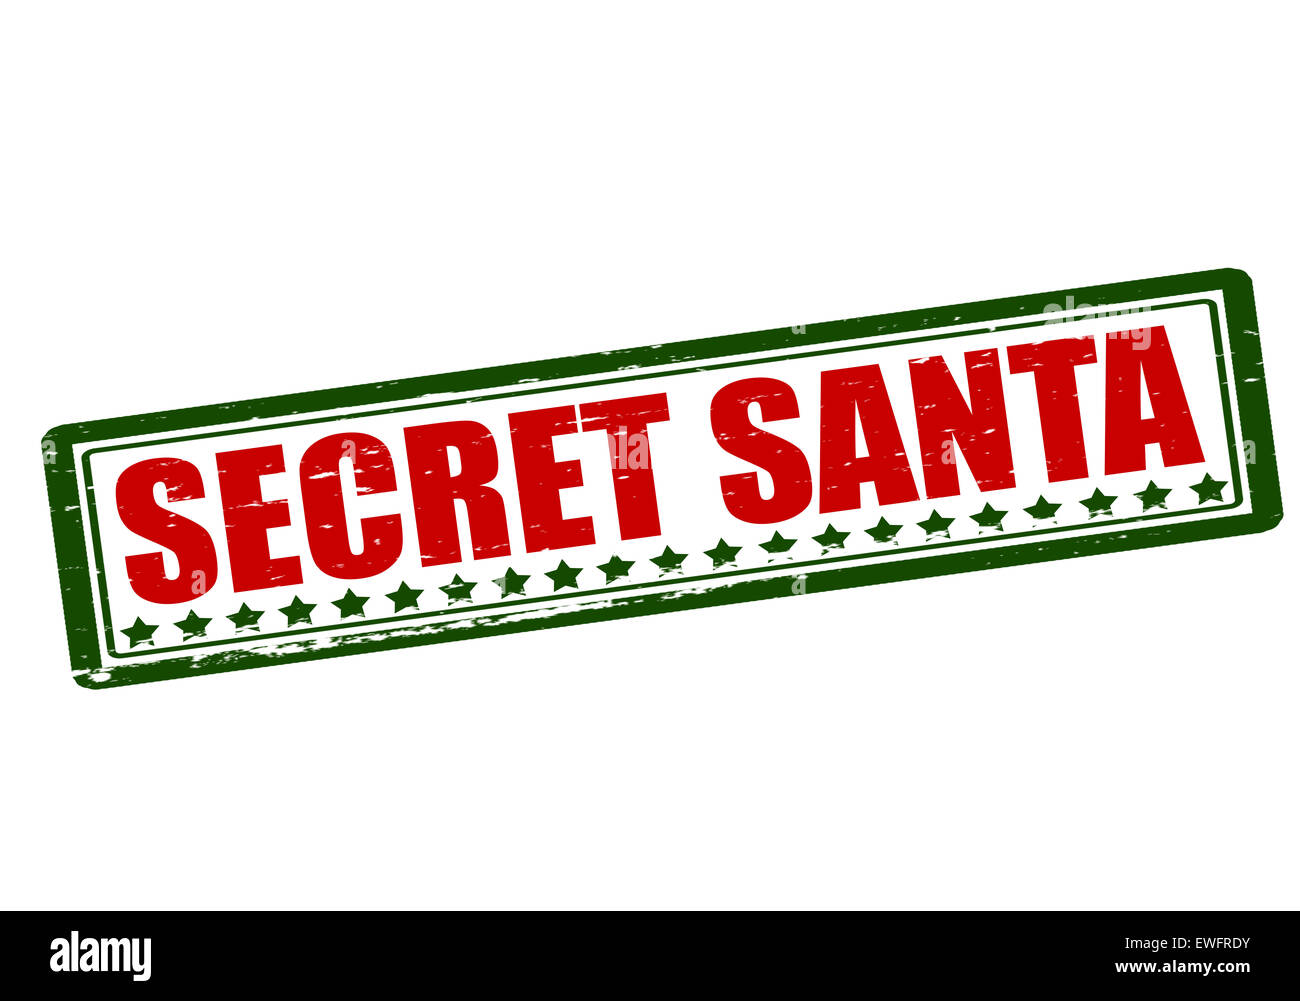 Rubber stamp with text secret Santa inside, illustration Stock Photo